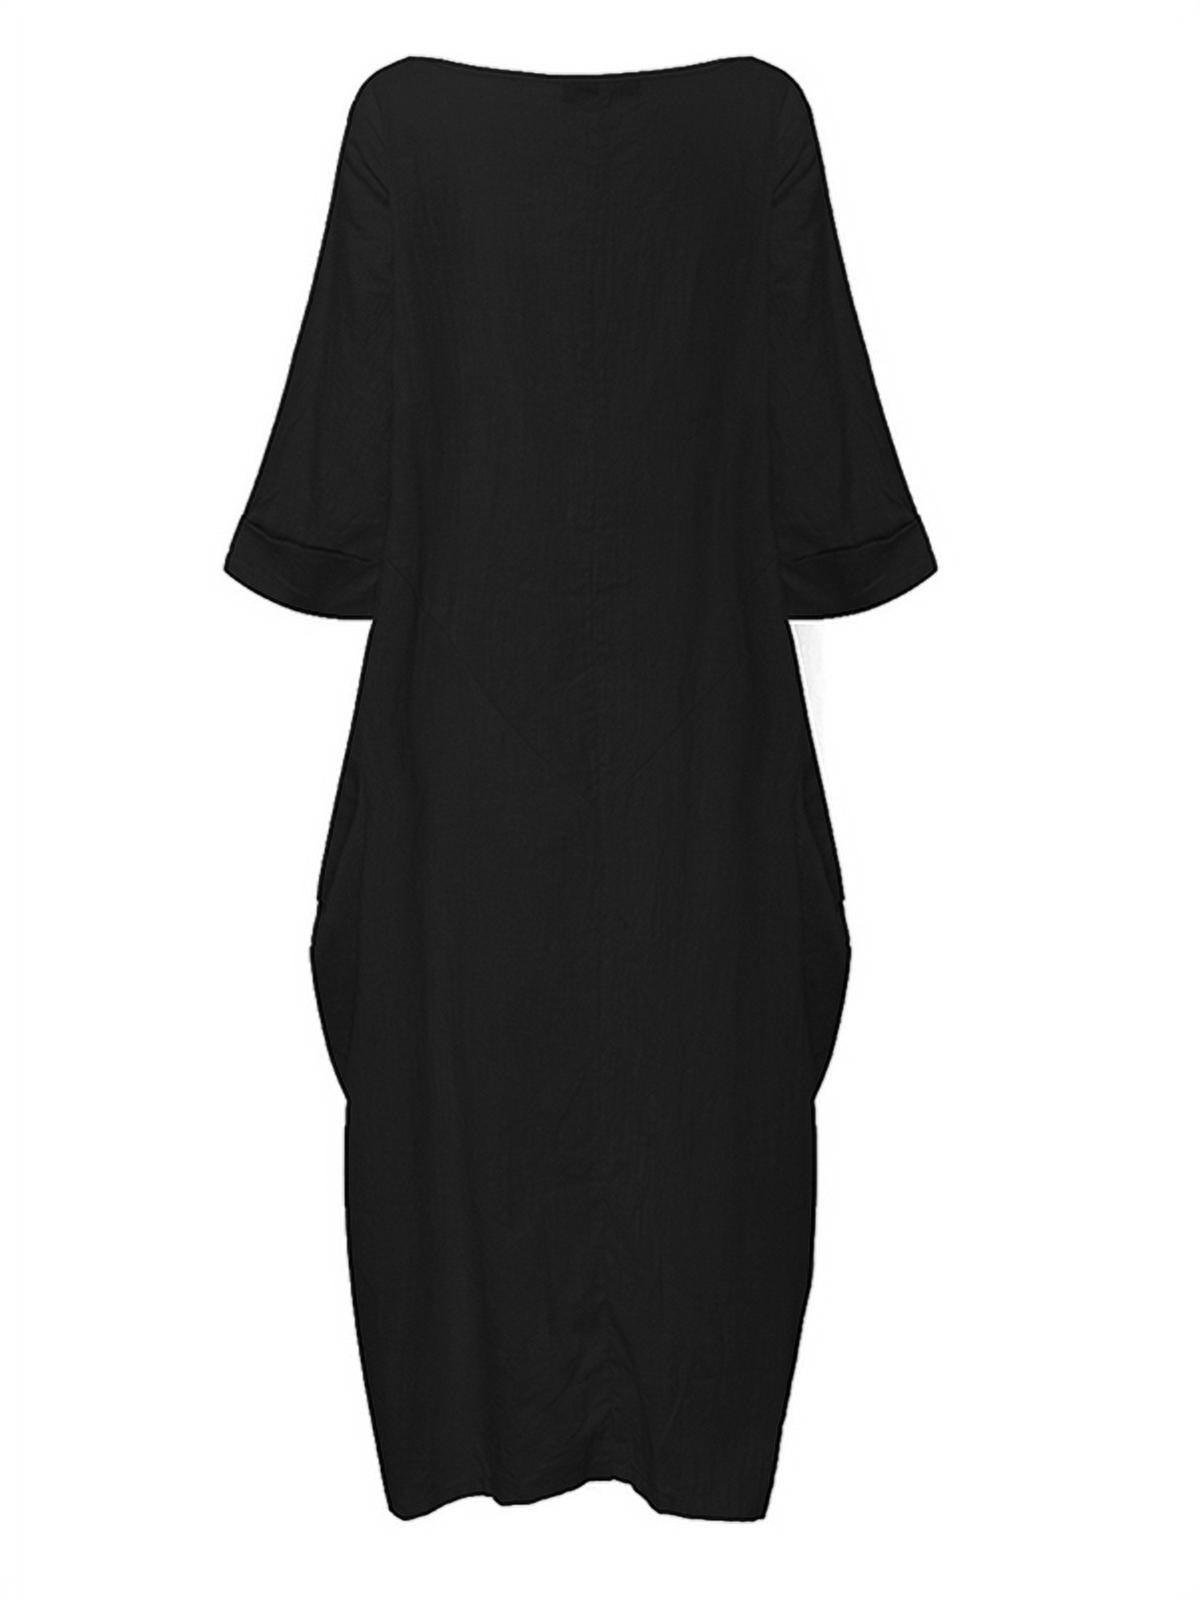 ZANZEA Womens Long Sleeve Casual Long Shirt Dresses - image 4 of 4